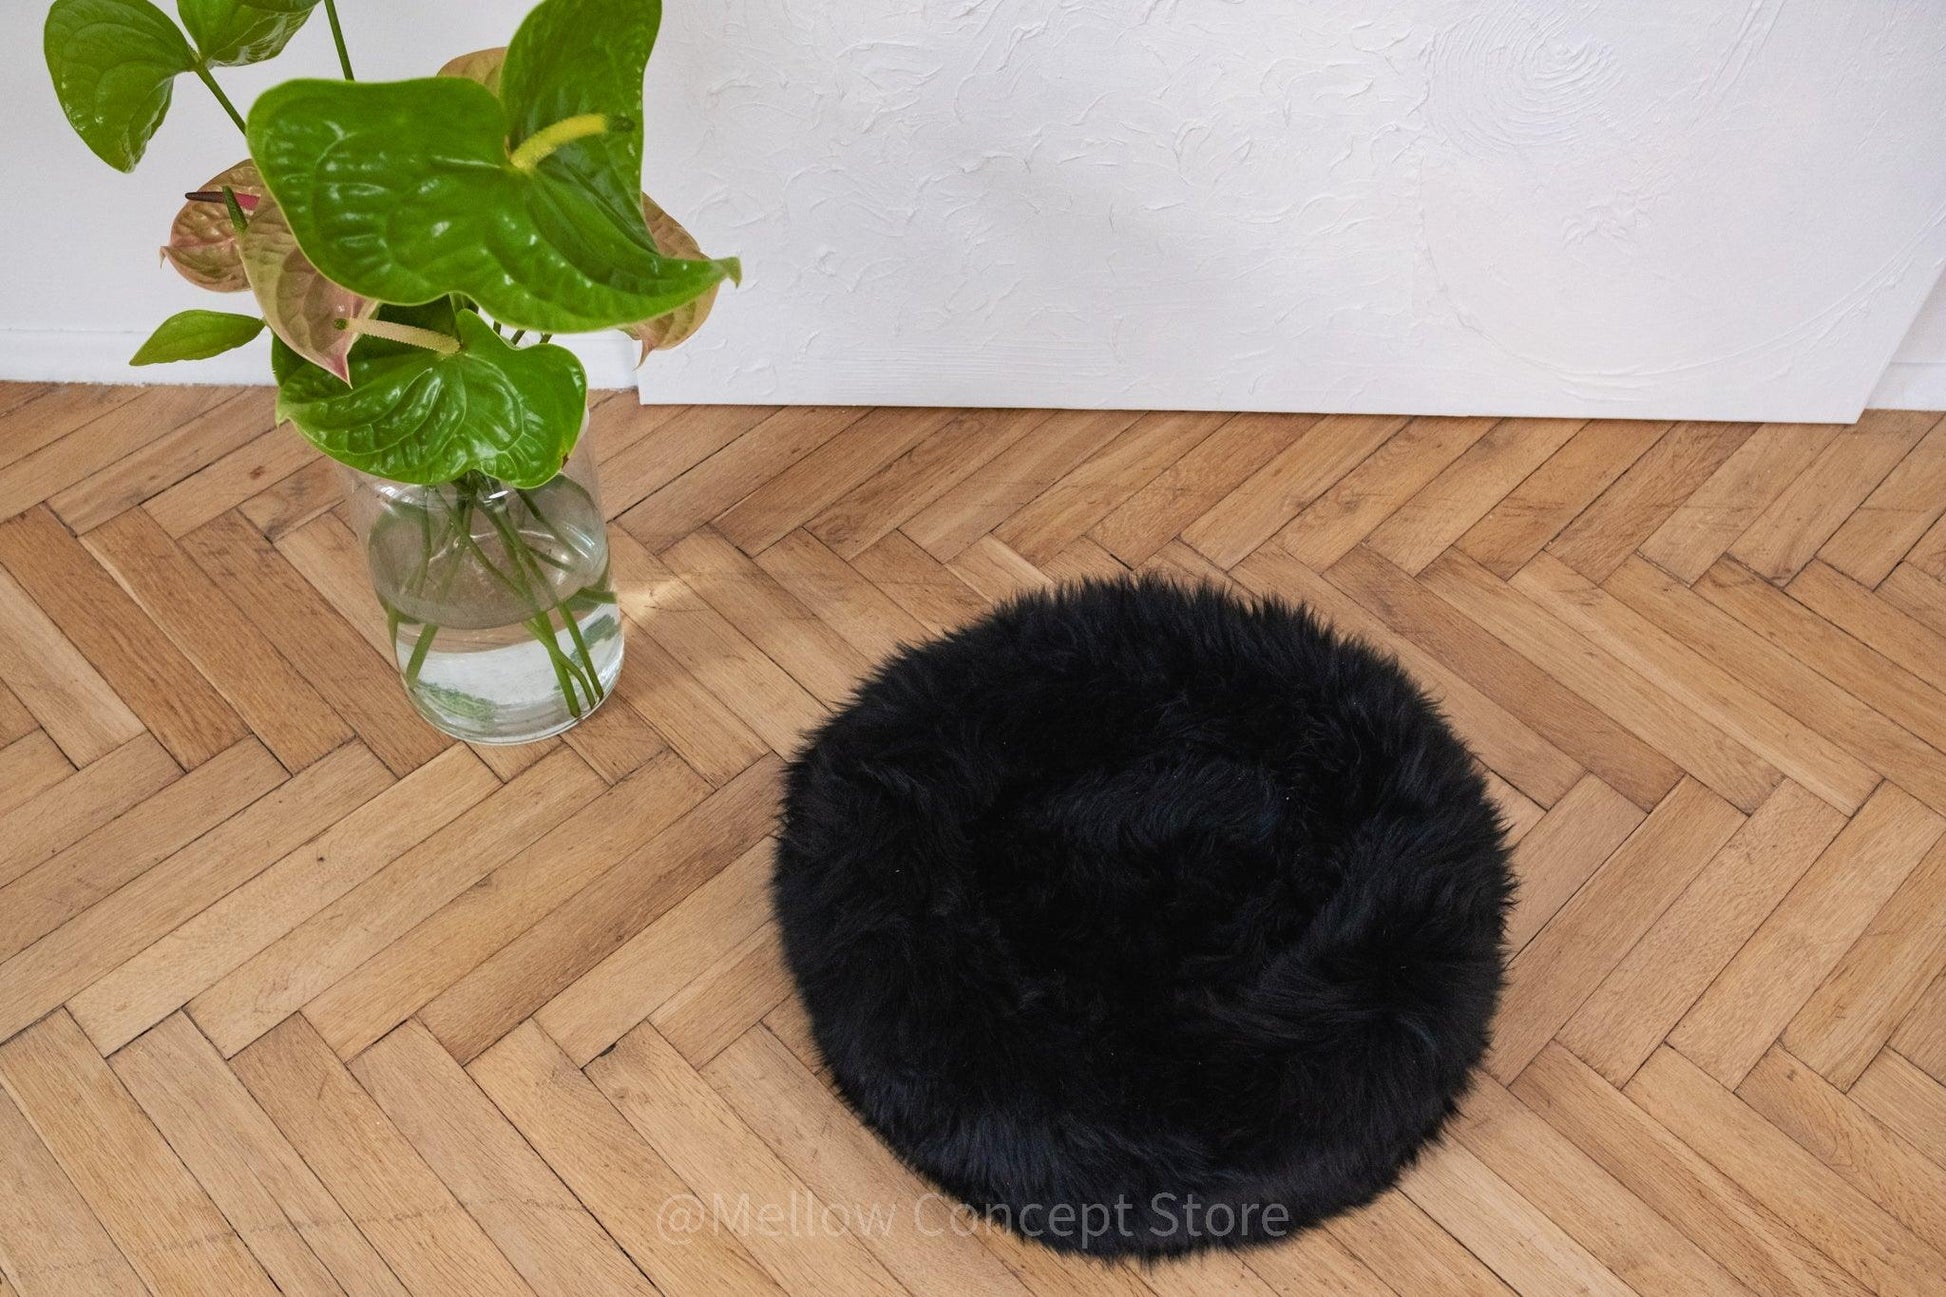 An Round Natural Sheepskin Pet Bed - Black on a wooden floor.